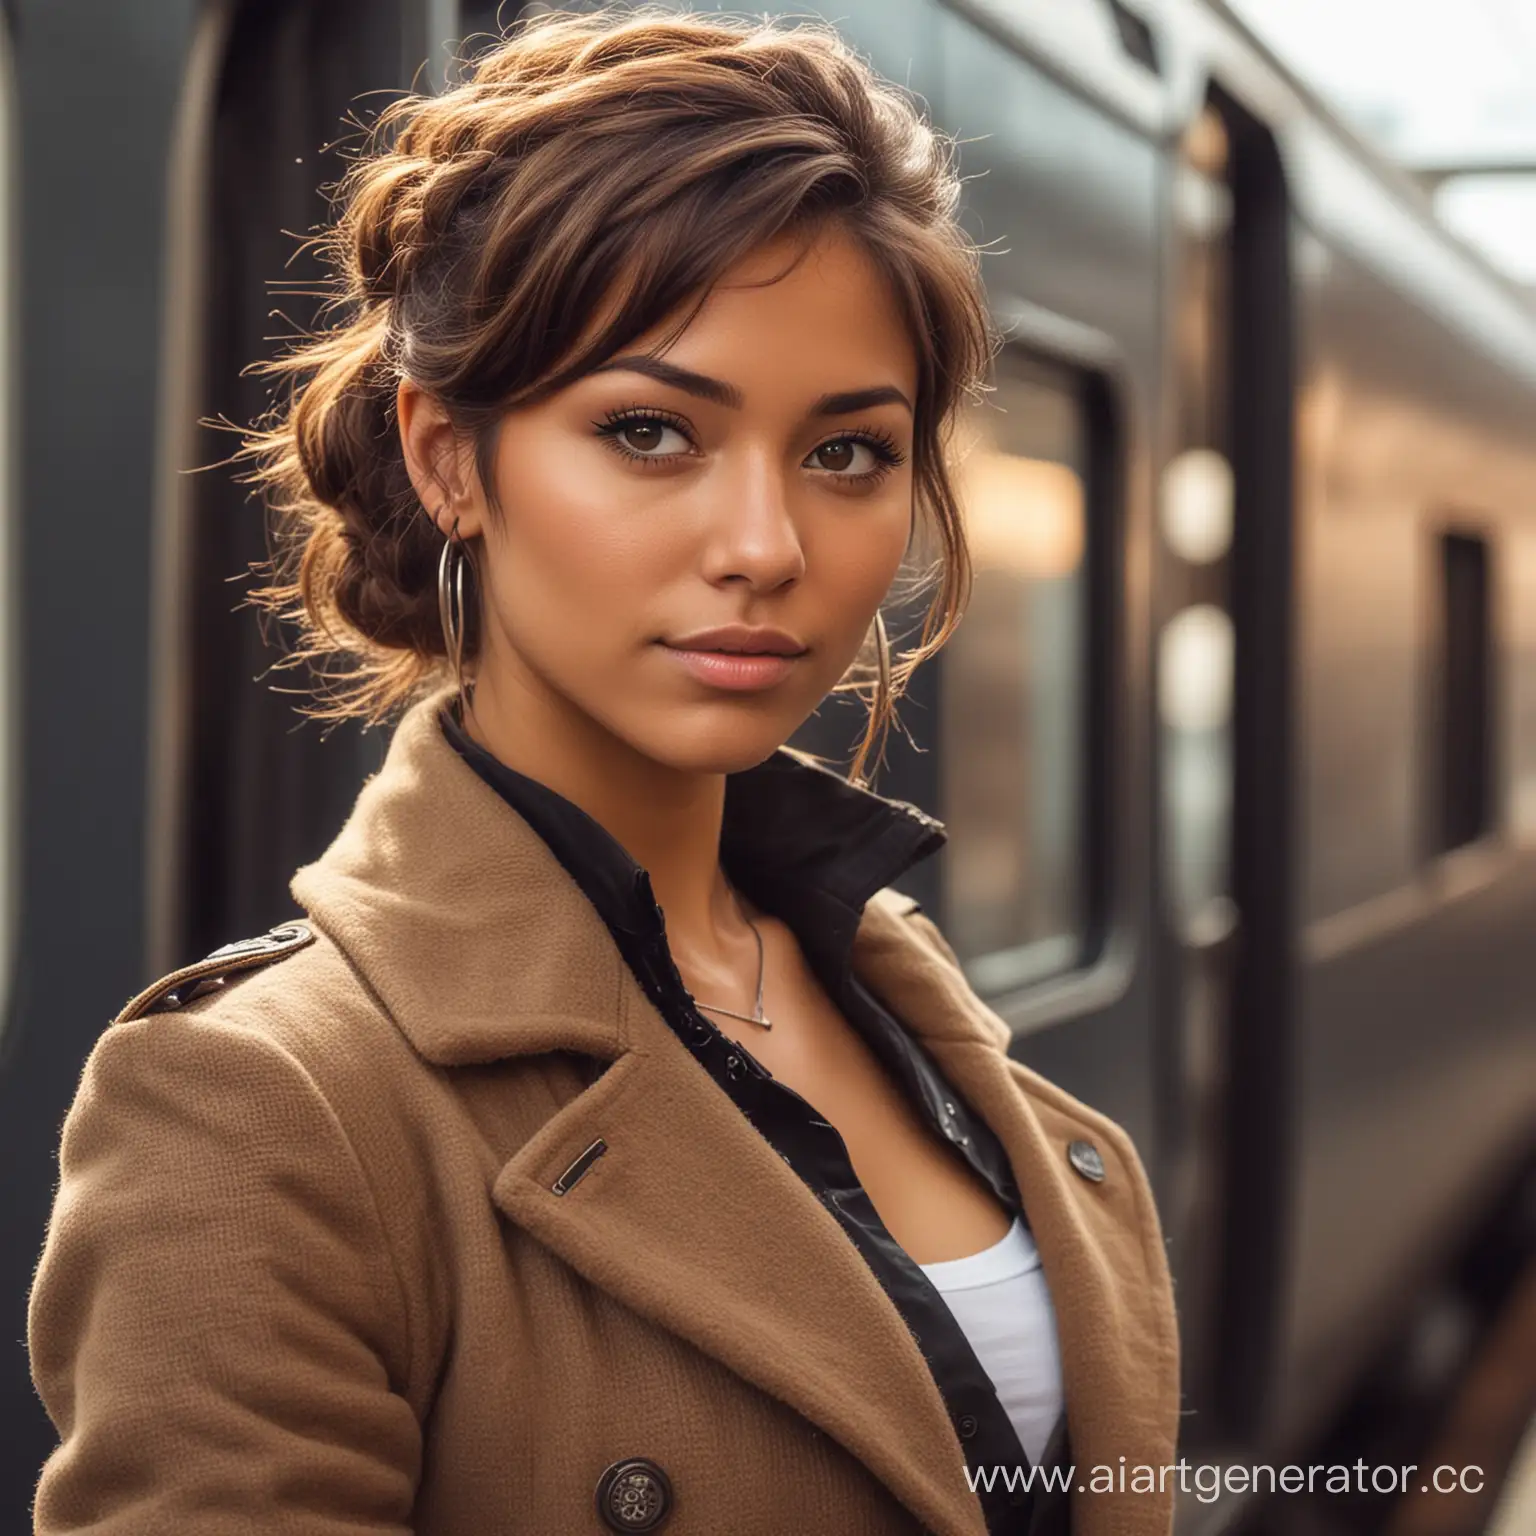 Clockpunk-Woman-with-Brown-Hair-Waiting-at-Train-Station